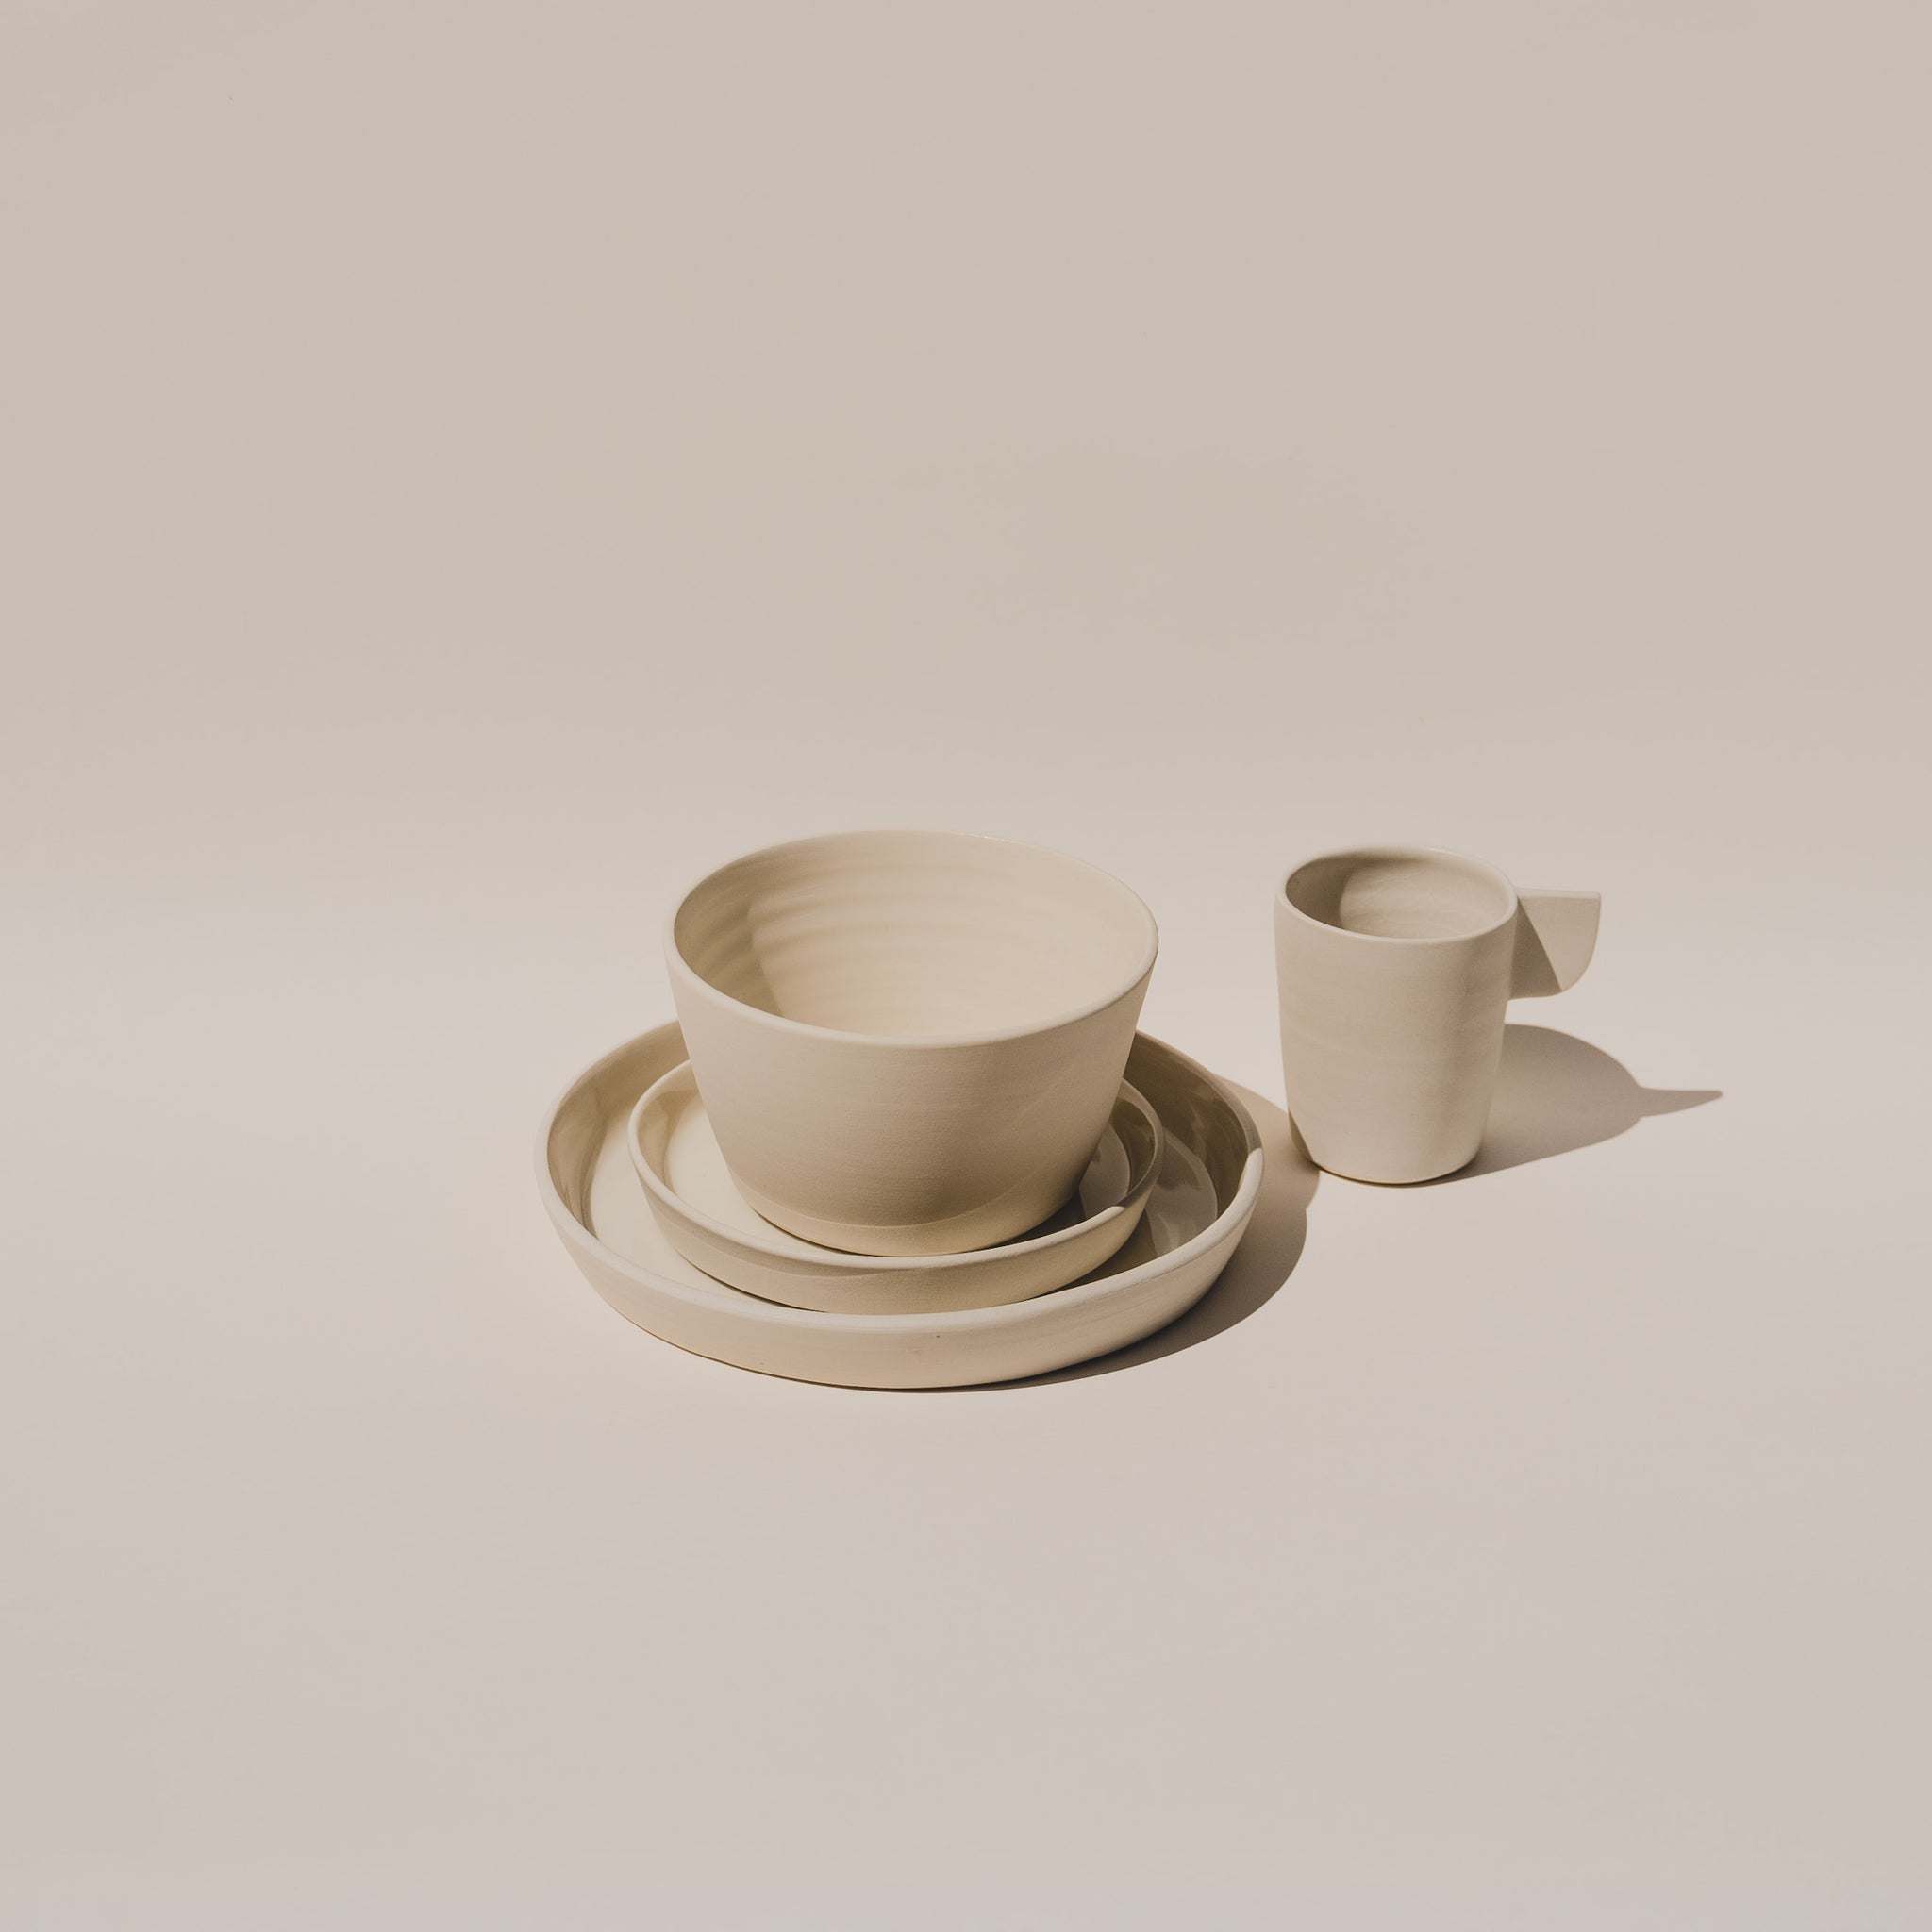 Ceramic plate set with ceramic bowl and ceramic mug in white